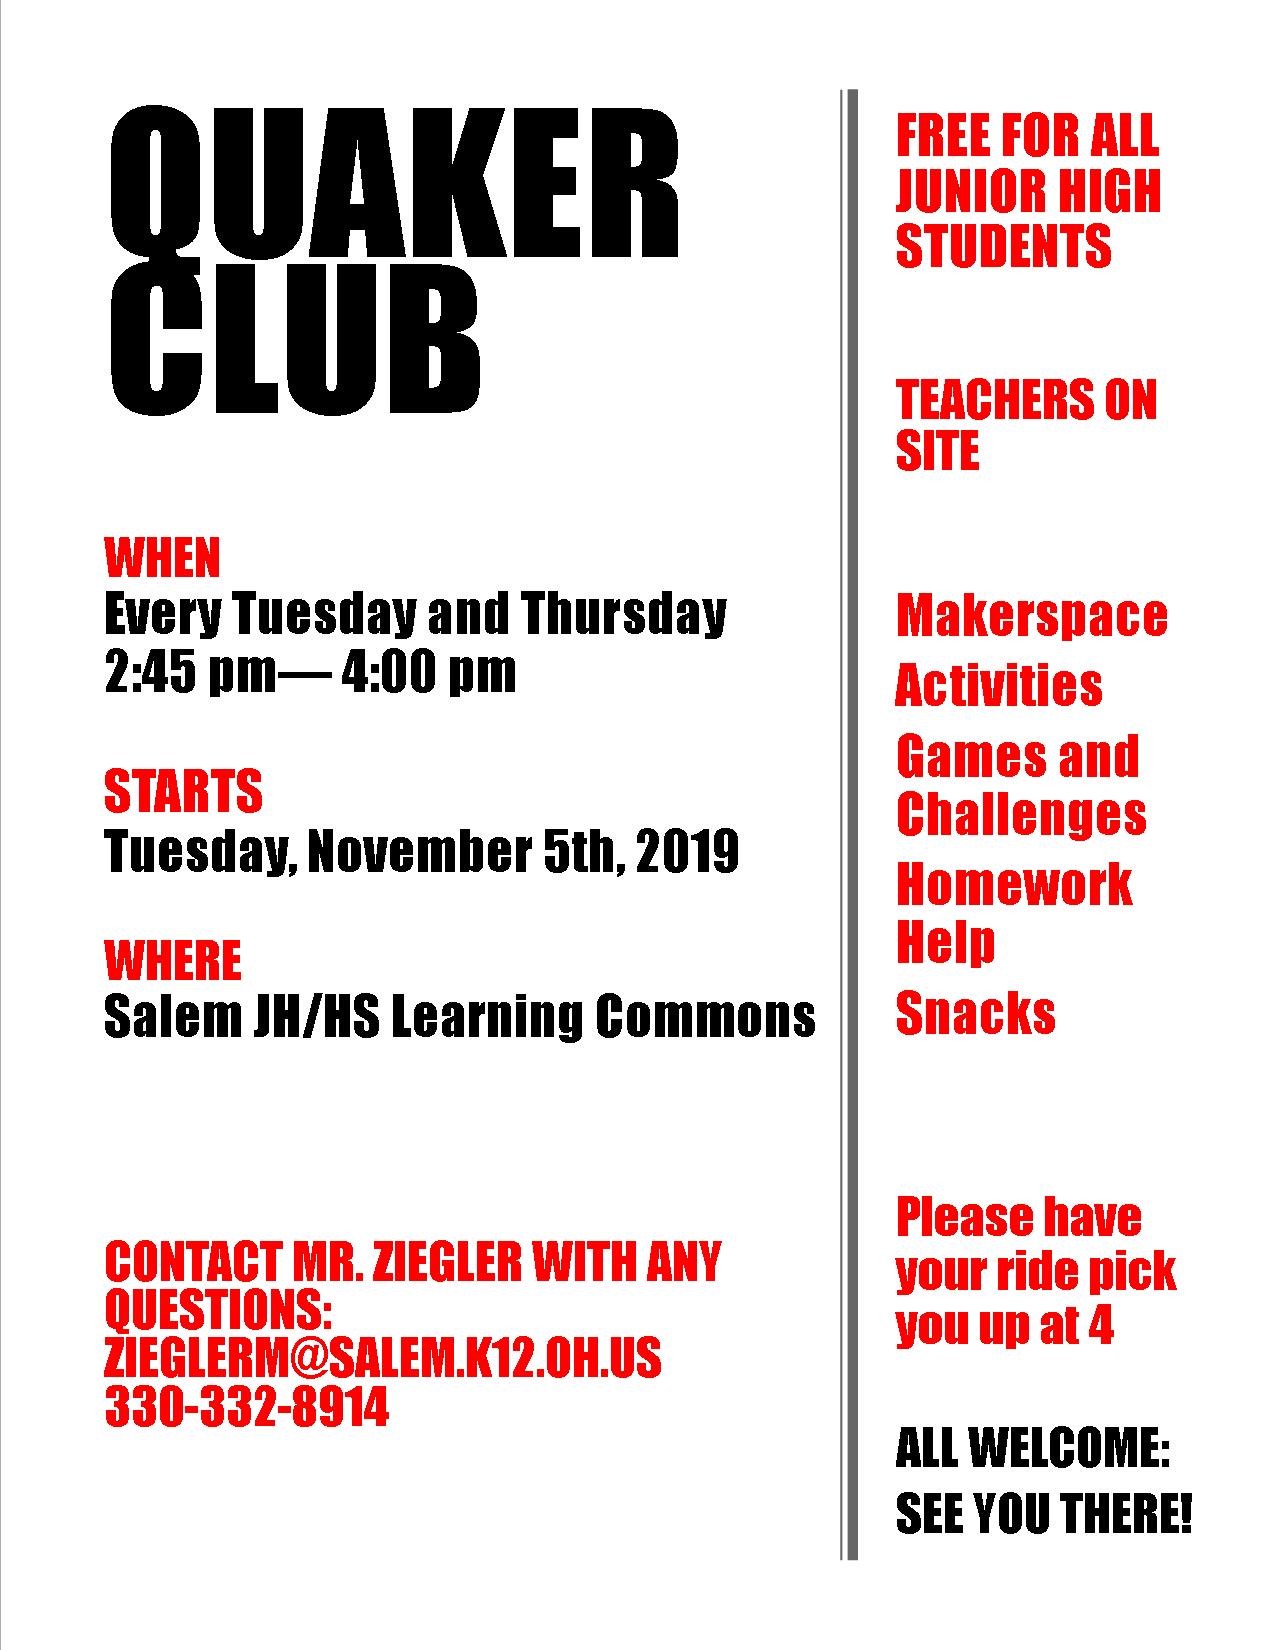 Quaker Club flyer 2019/2020